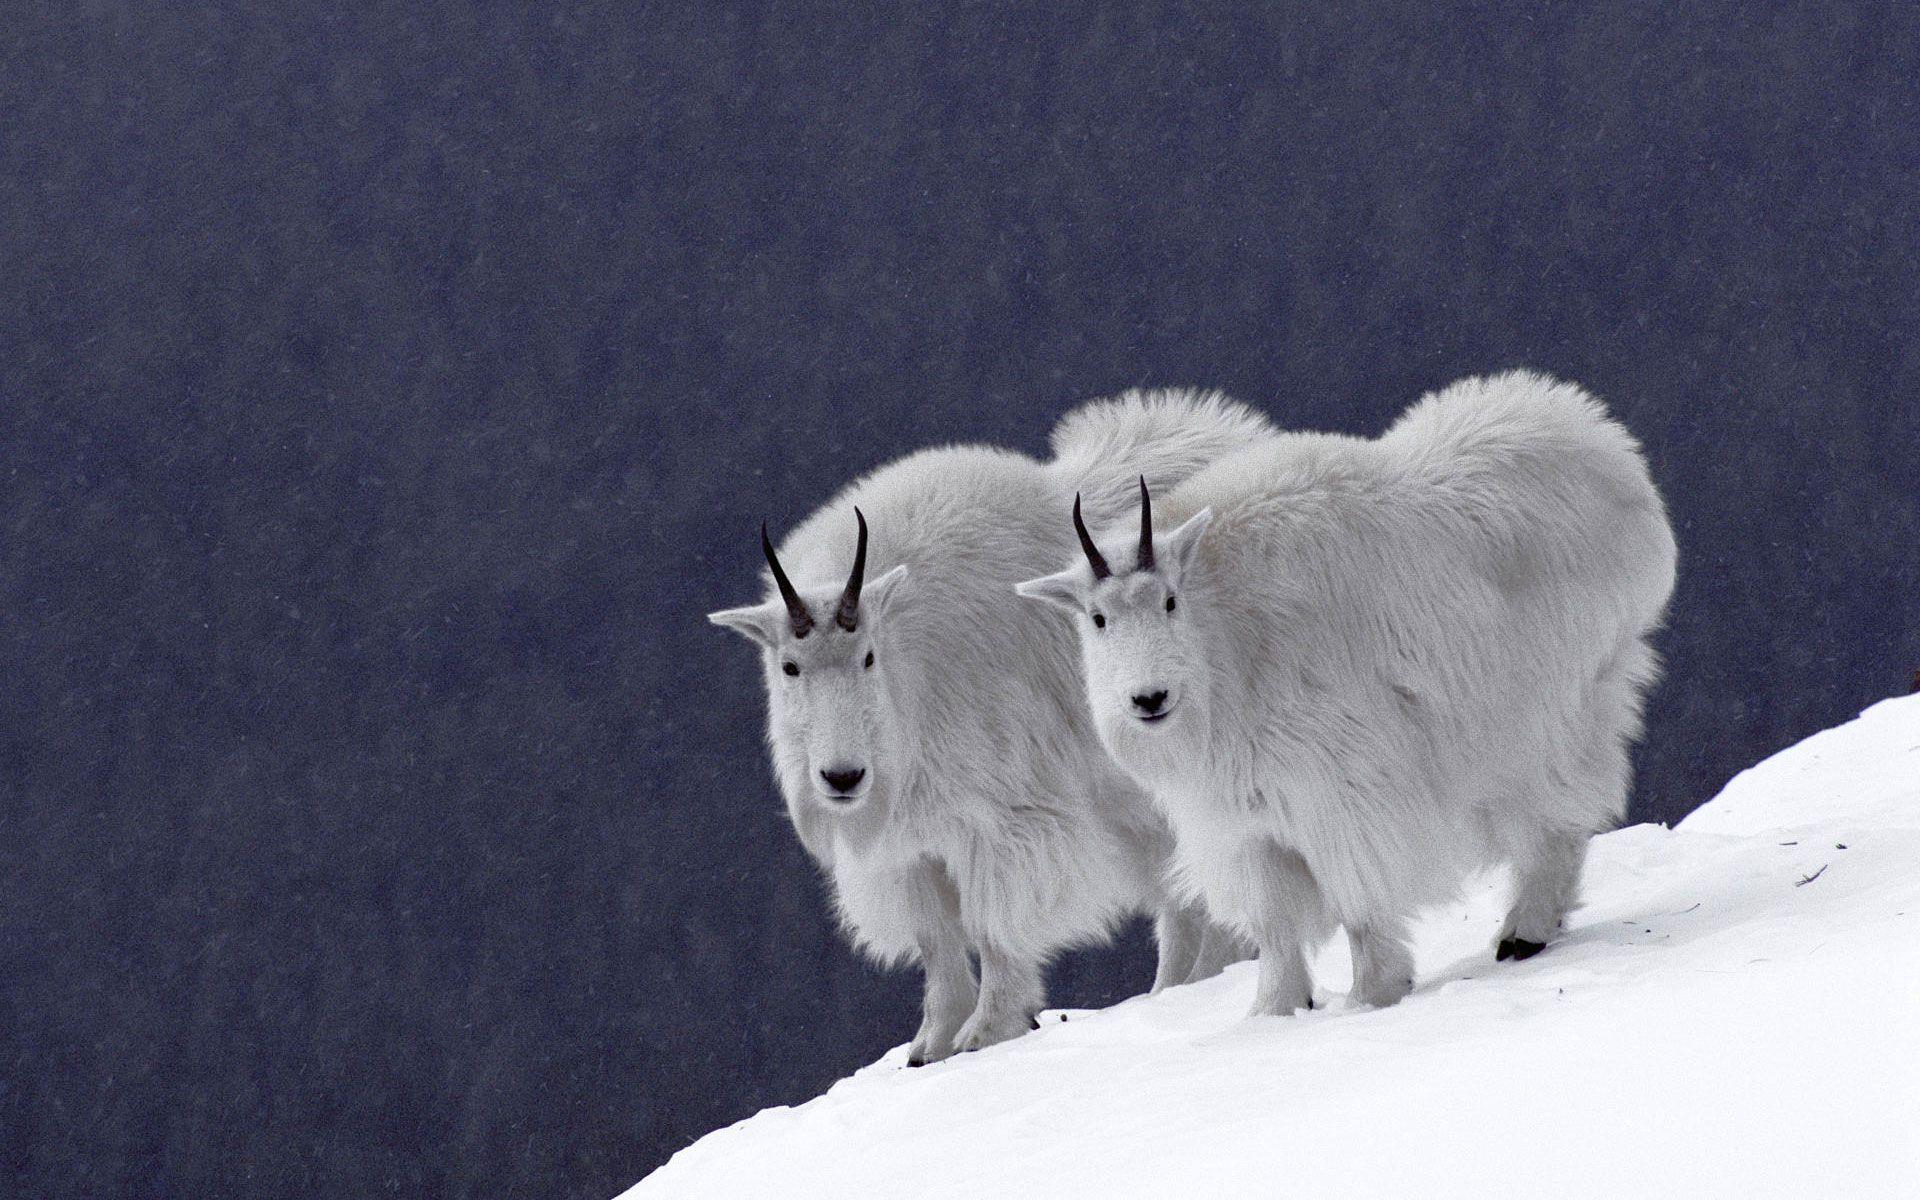 Rocky Mountains. ., Image, mountain goats rocky mountains